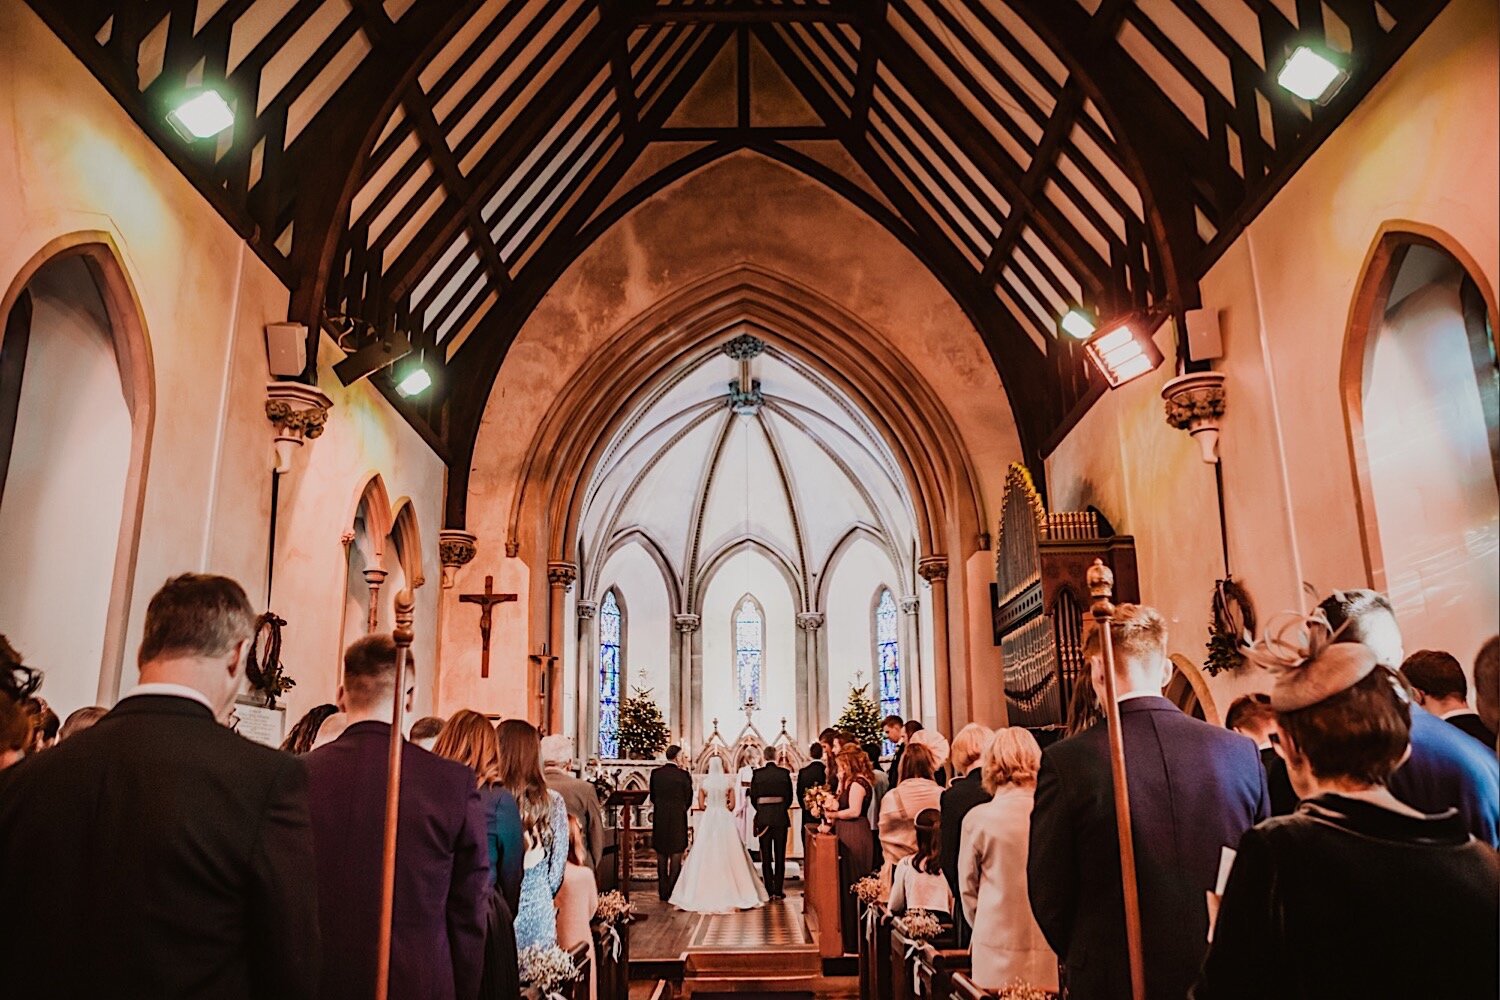 054_TWS-473_henley_winter_bride_billet_church_photography_millitary_oxfordshire_crooked_groom_ceremony_wedding.jpg